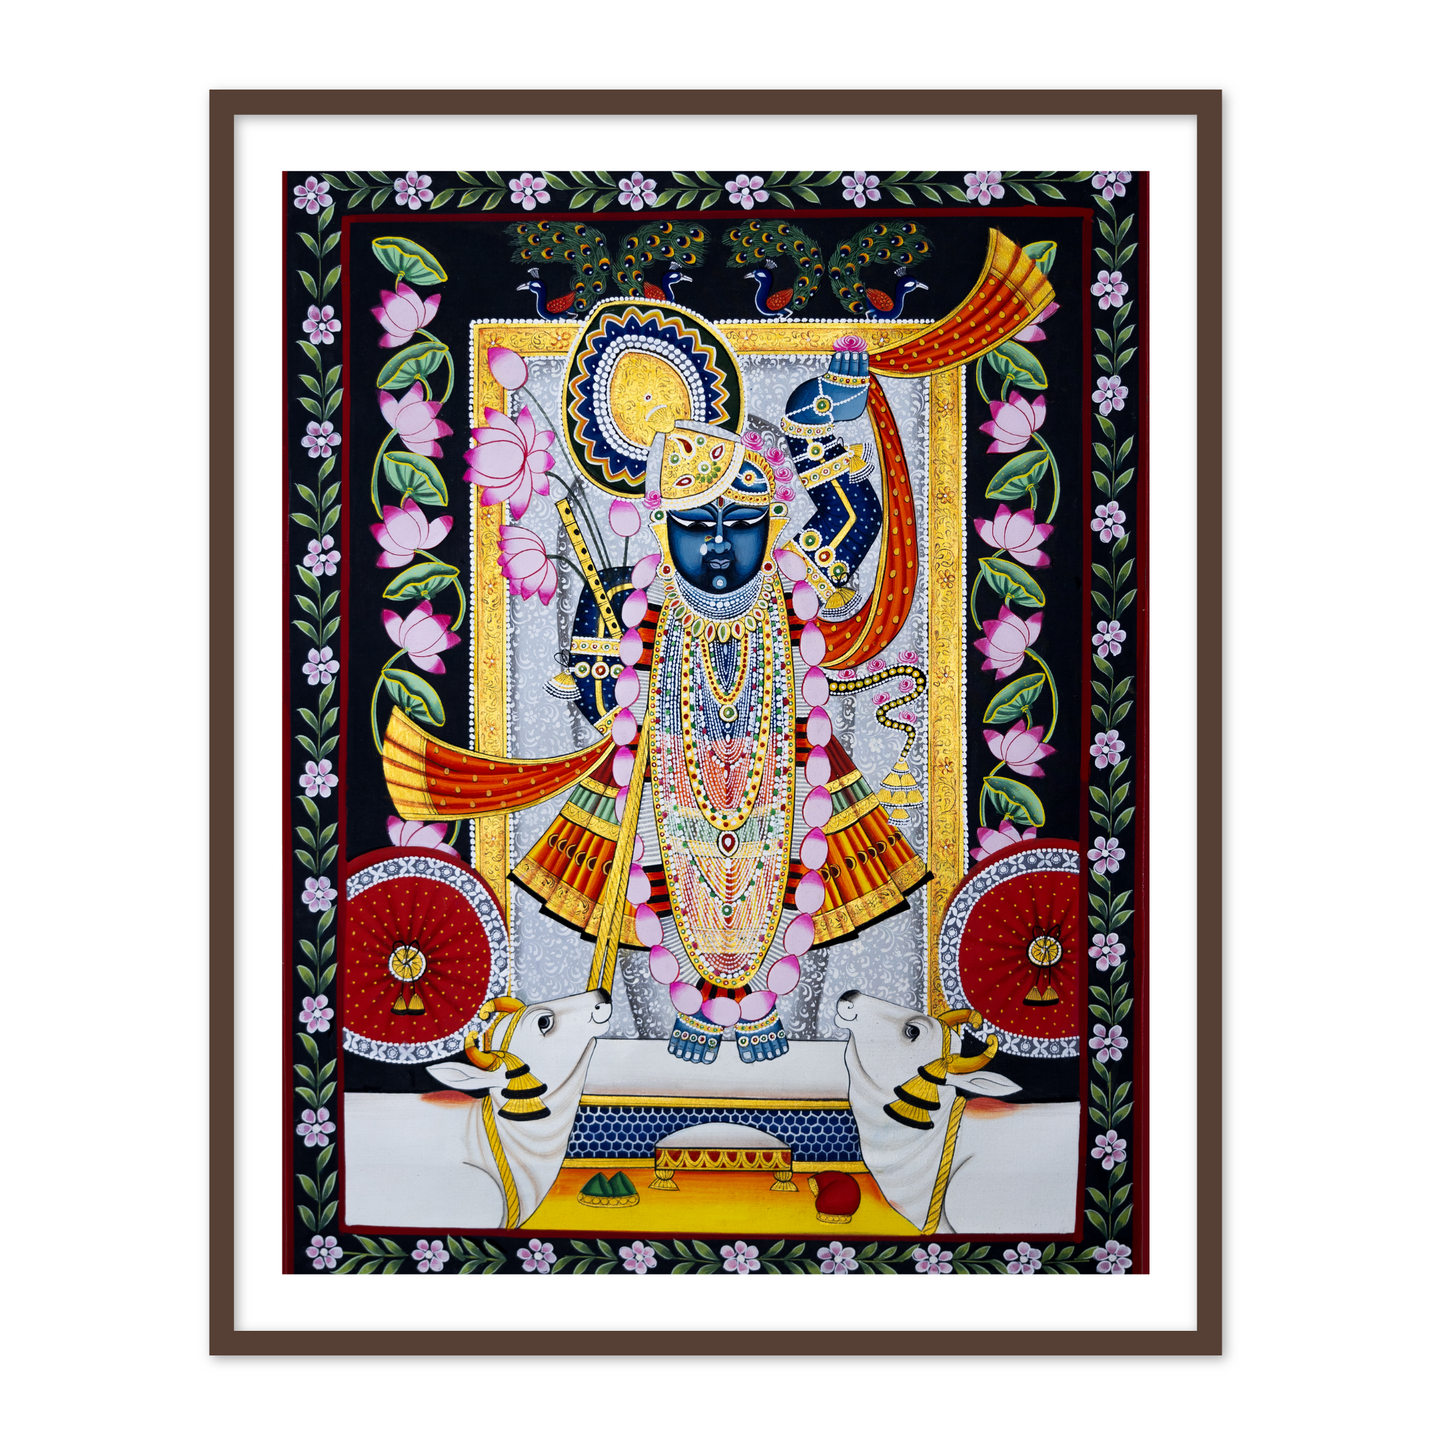 Buy Shrinathji Pichwai Painting | Indian Art for Wall Decor